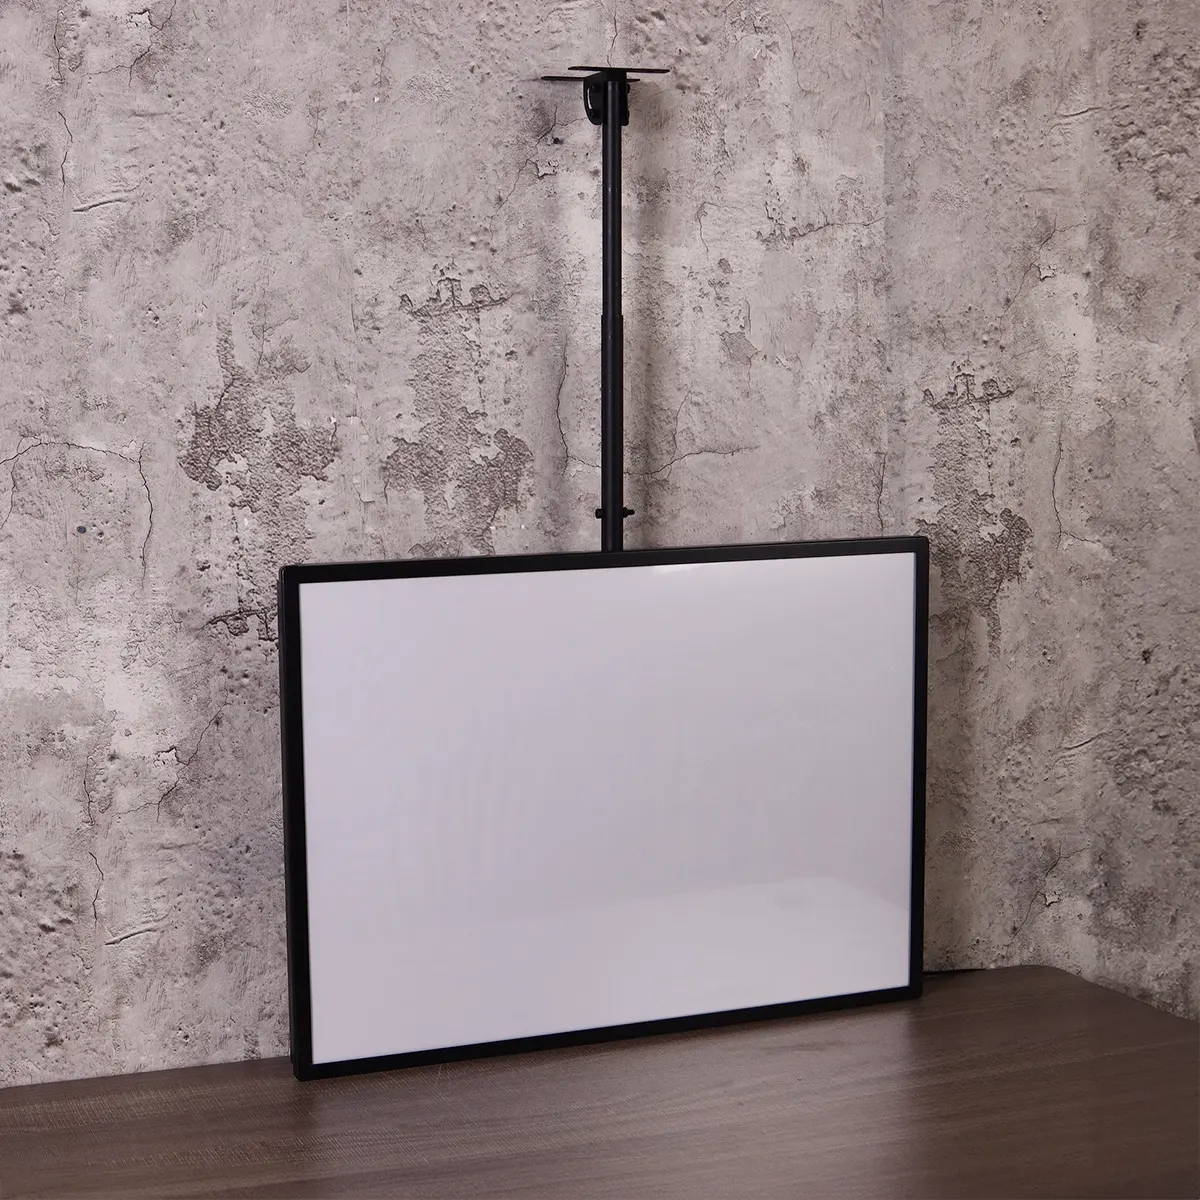 Compact Hanging Menu LED Advertising Display Box Signs